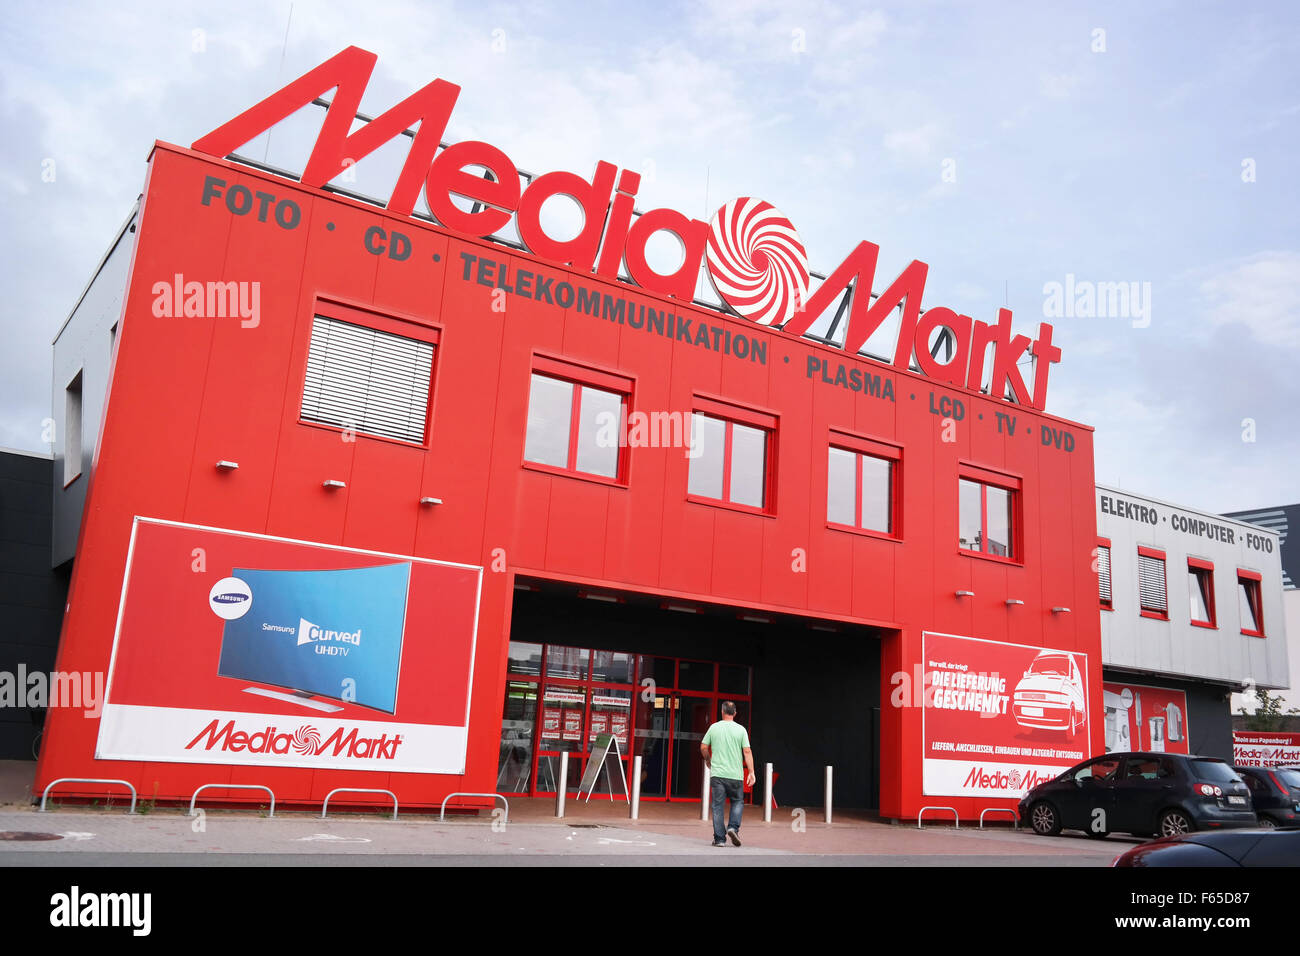 mediamarkt media markt logo high resolution stock photography and images alamy